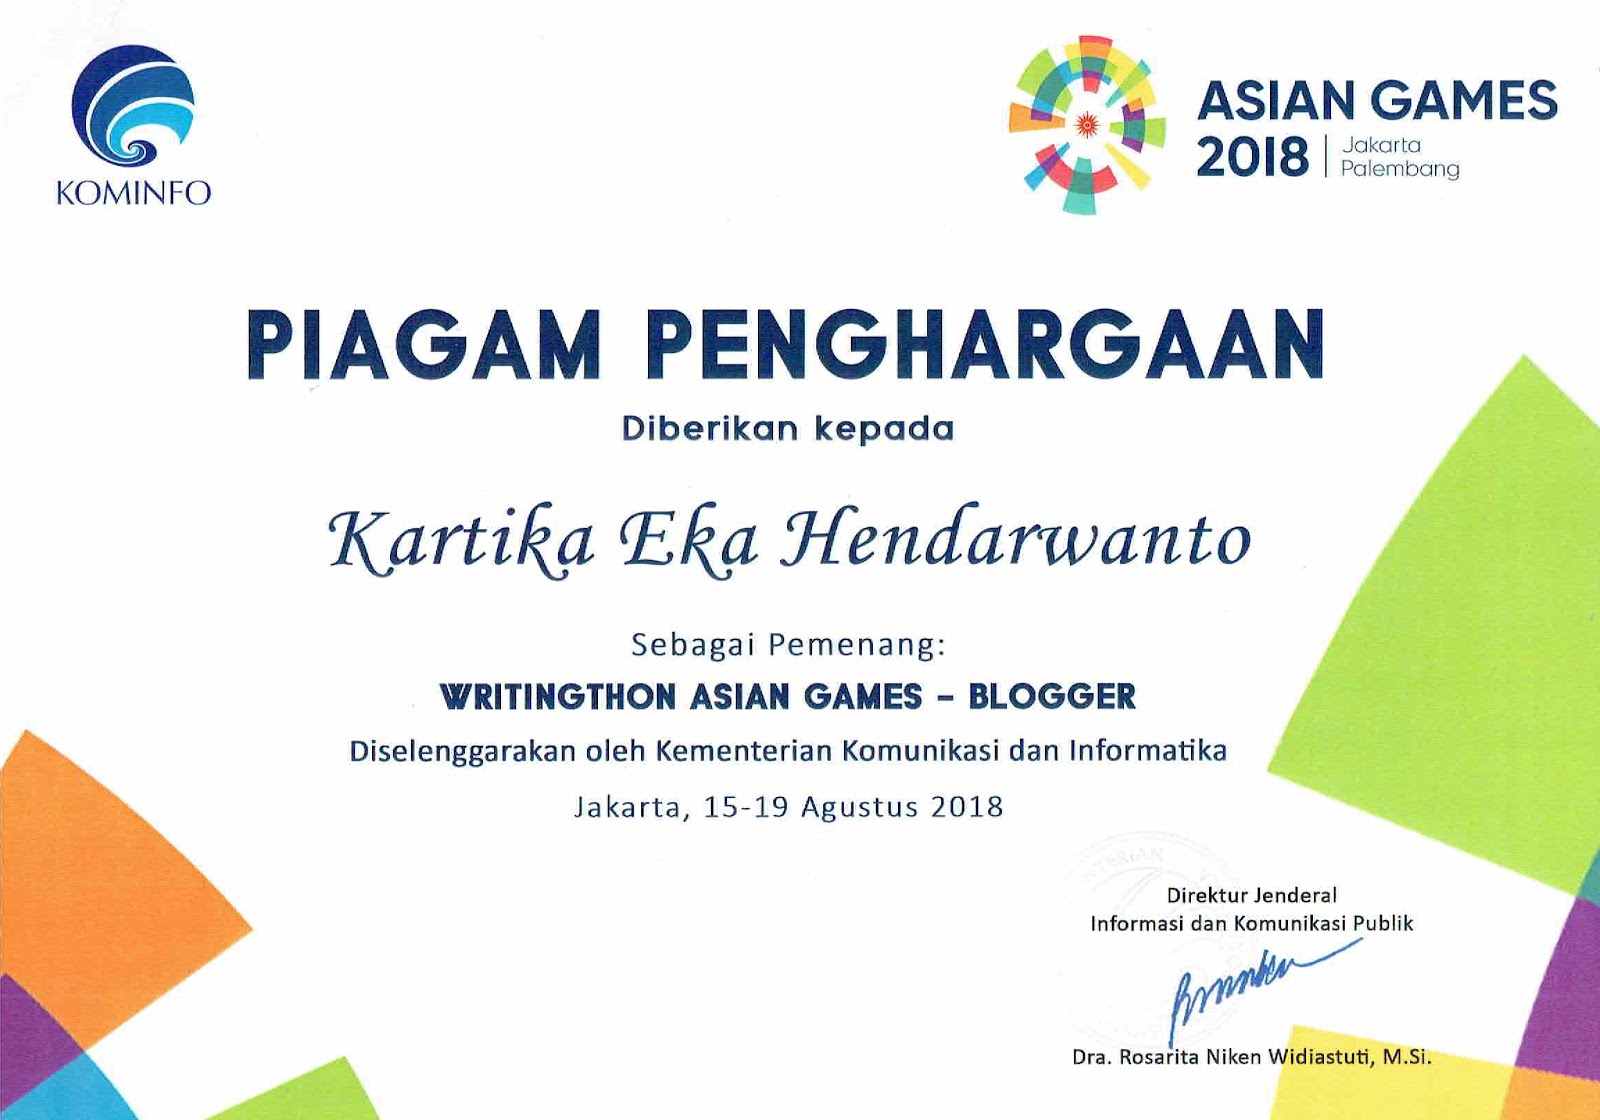 Writingthon Asian Games 2018